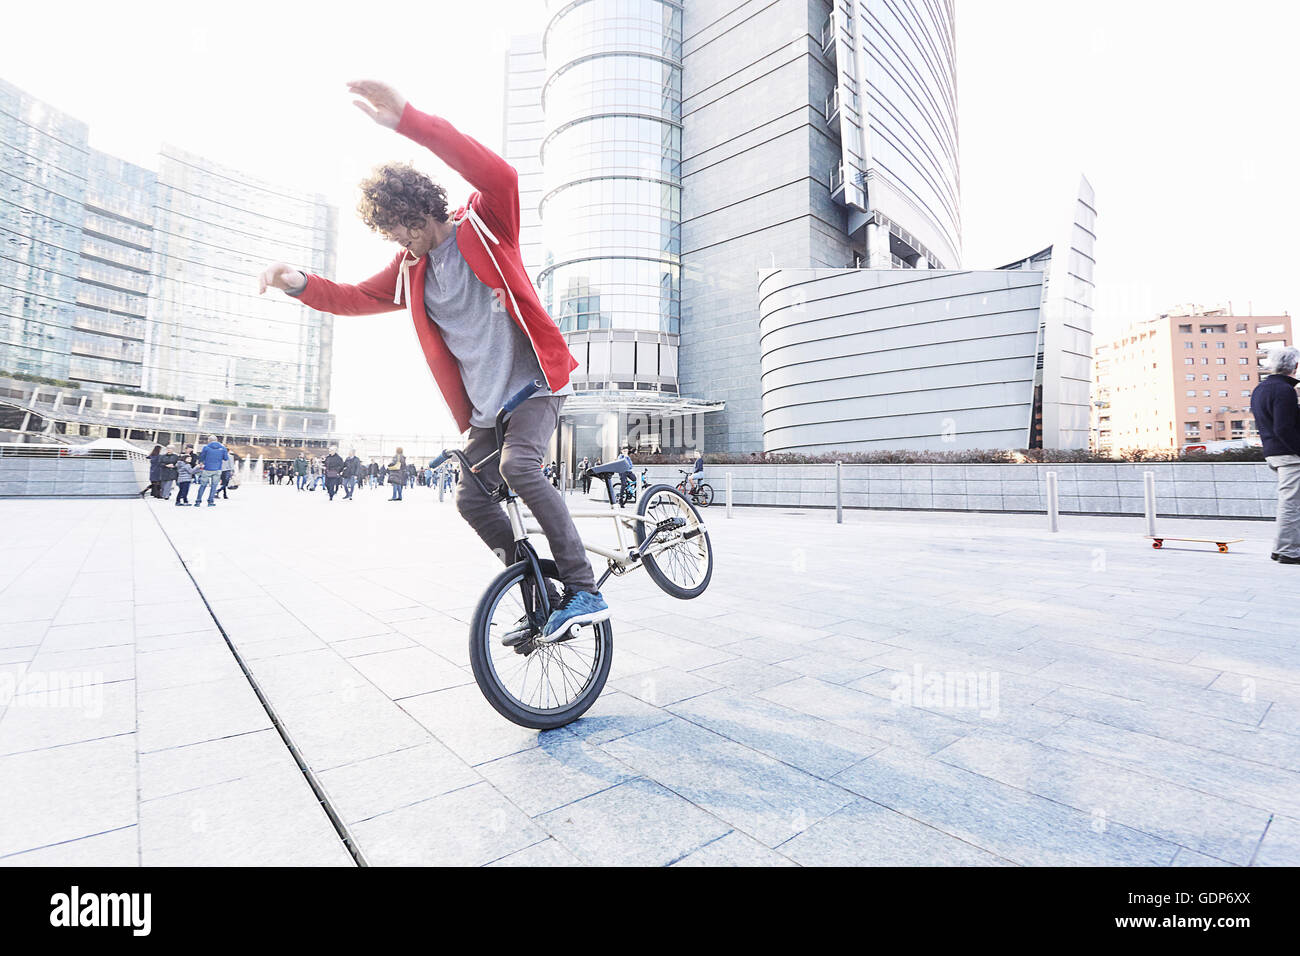 BMX Biker doing stunt in urban area Stock Photo